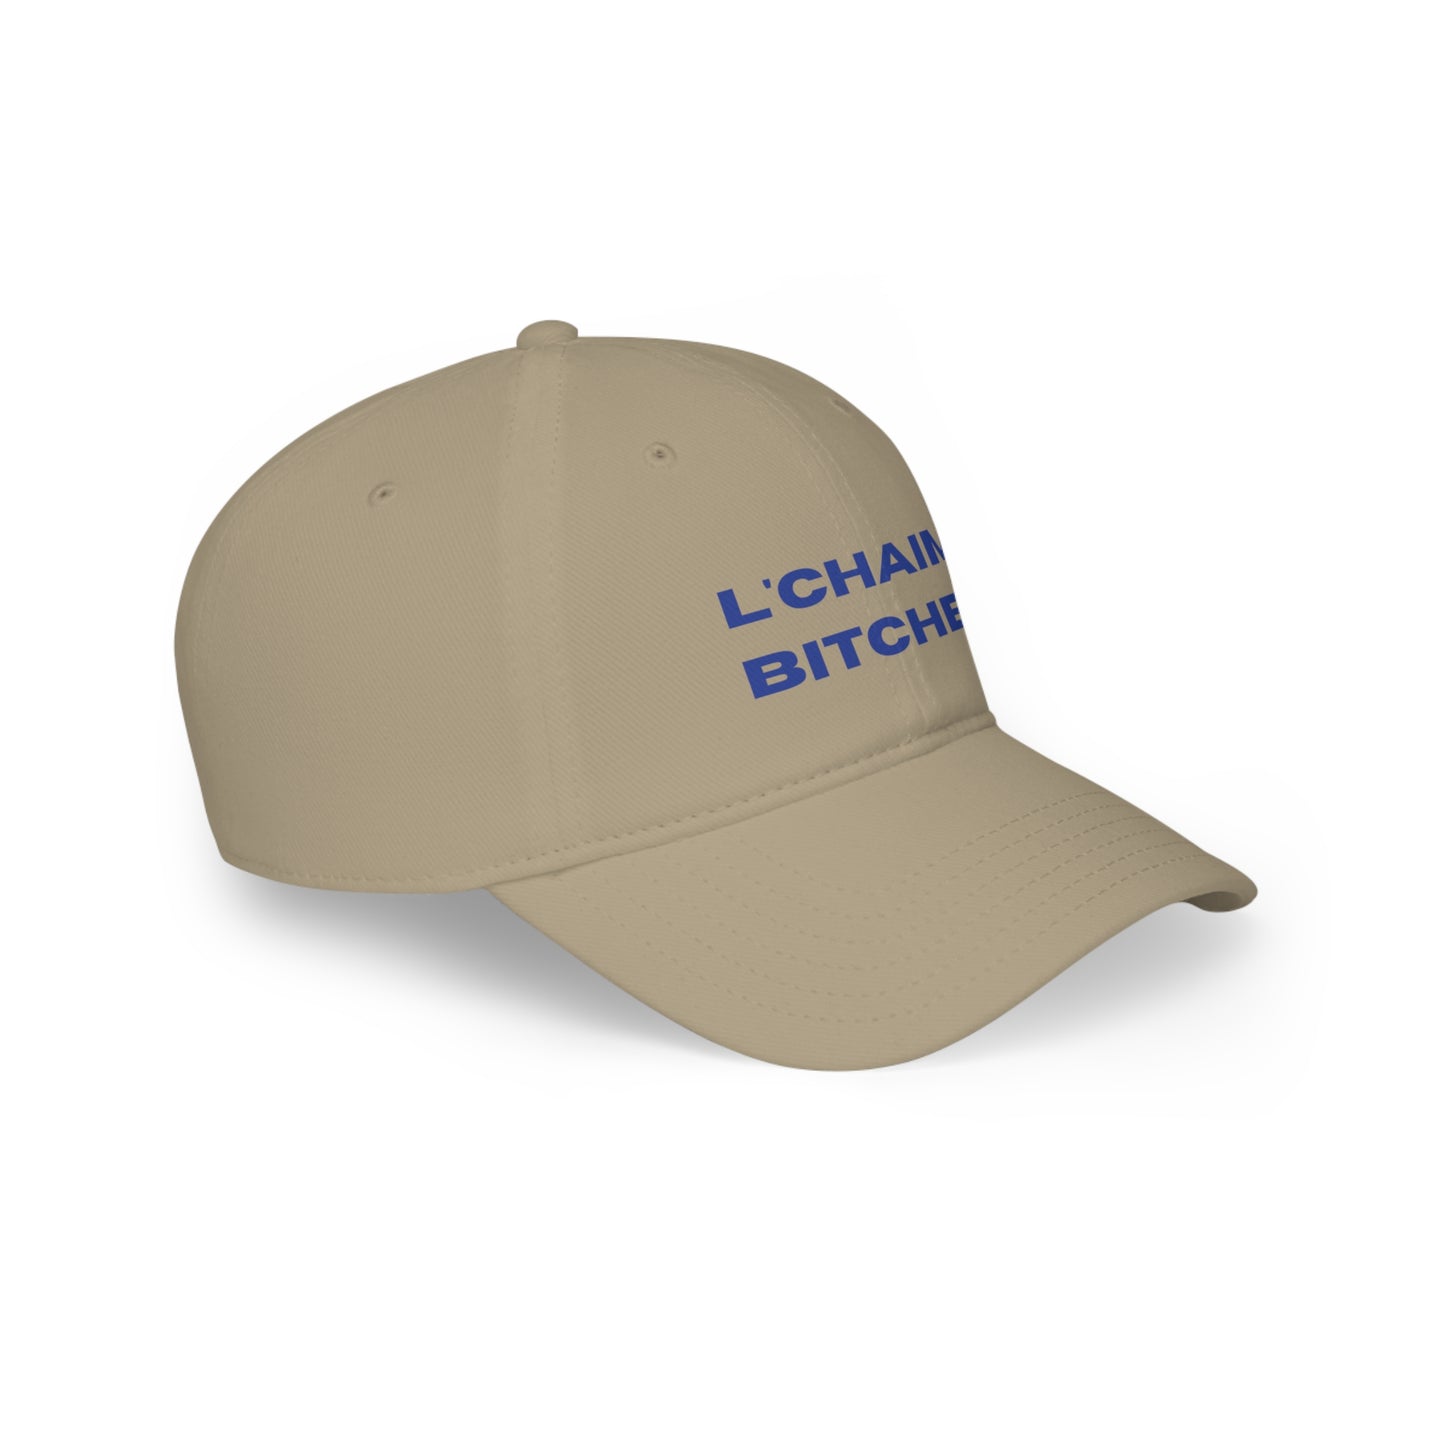 "L' Chaim, B*tches" Drinking Hat